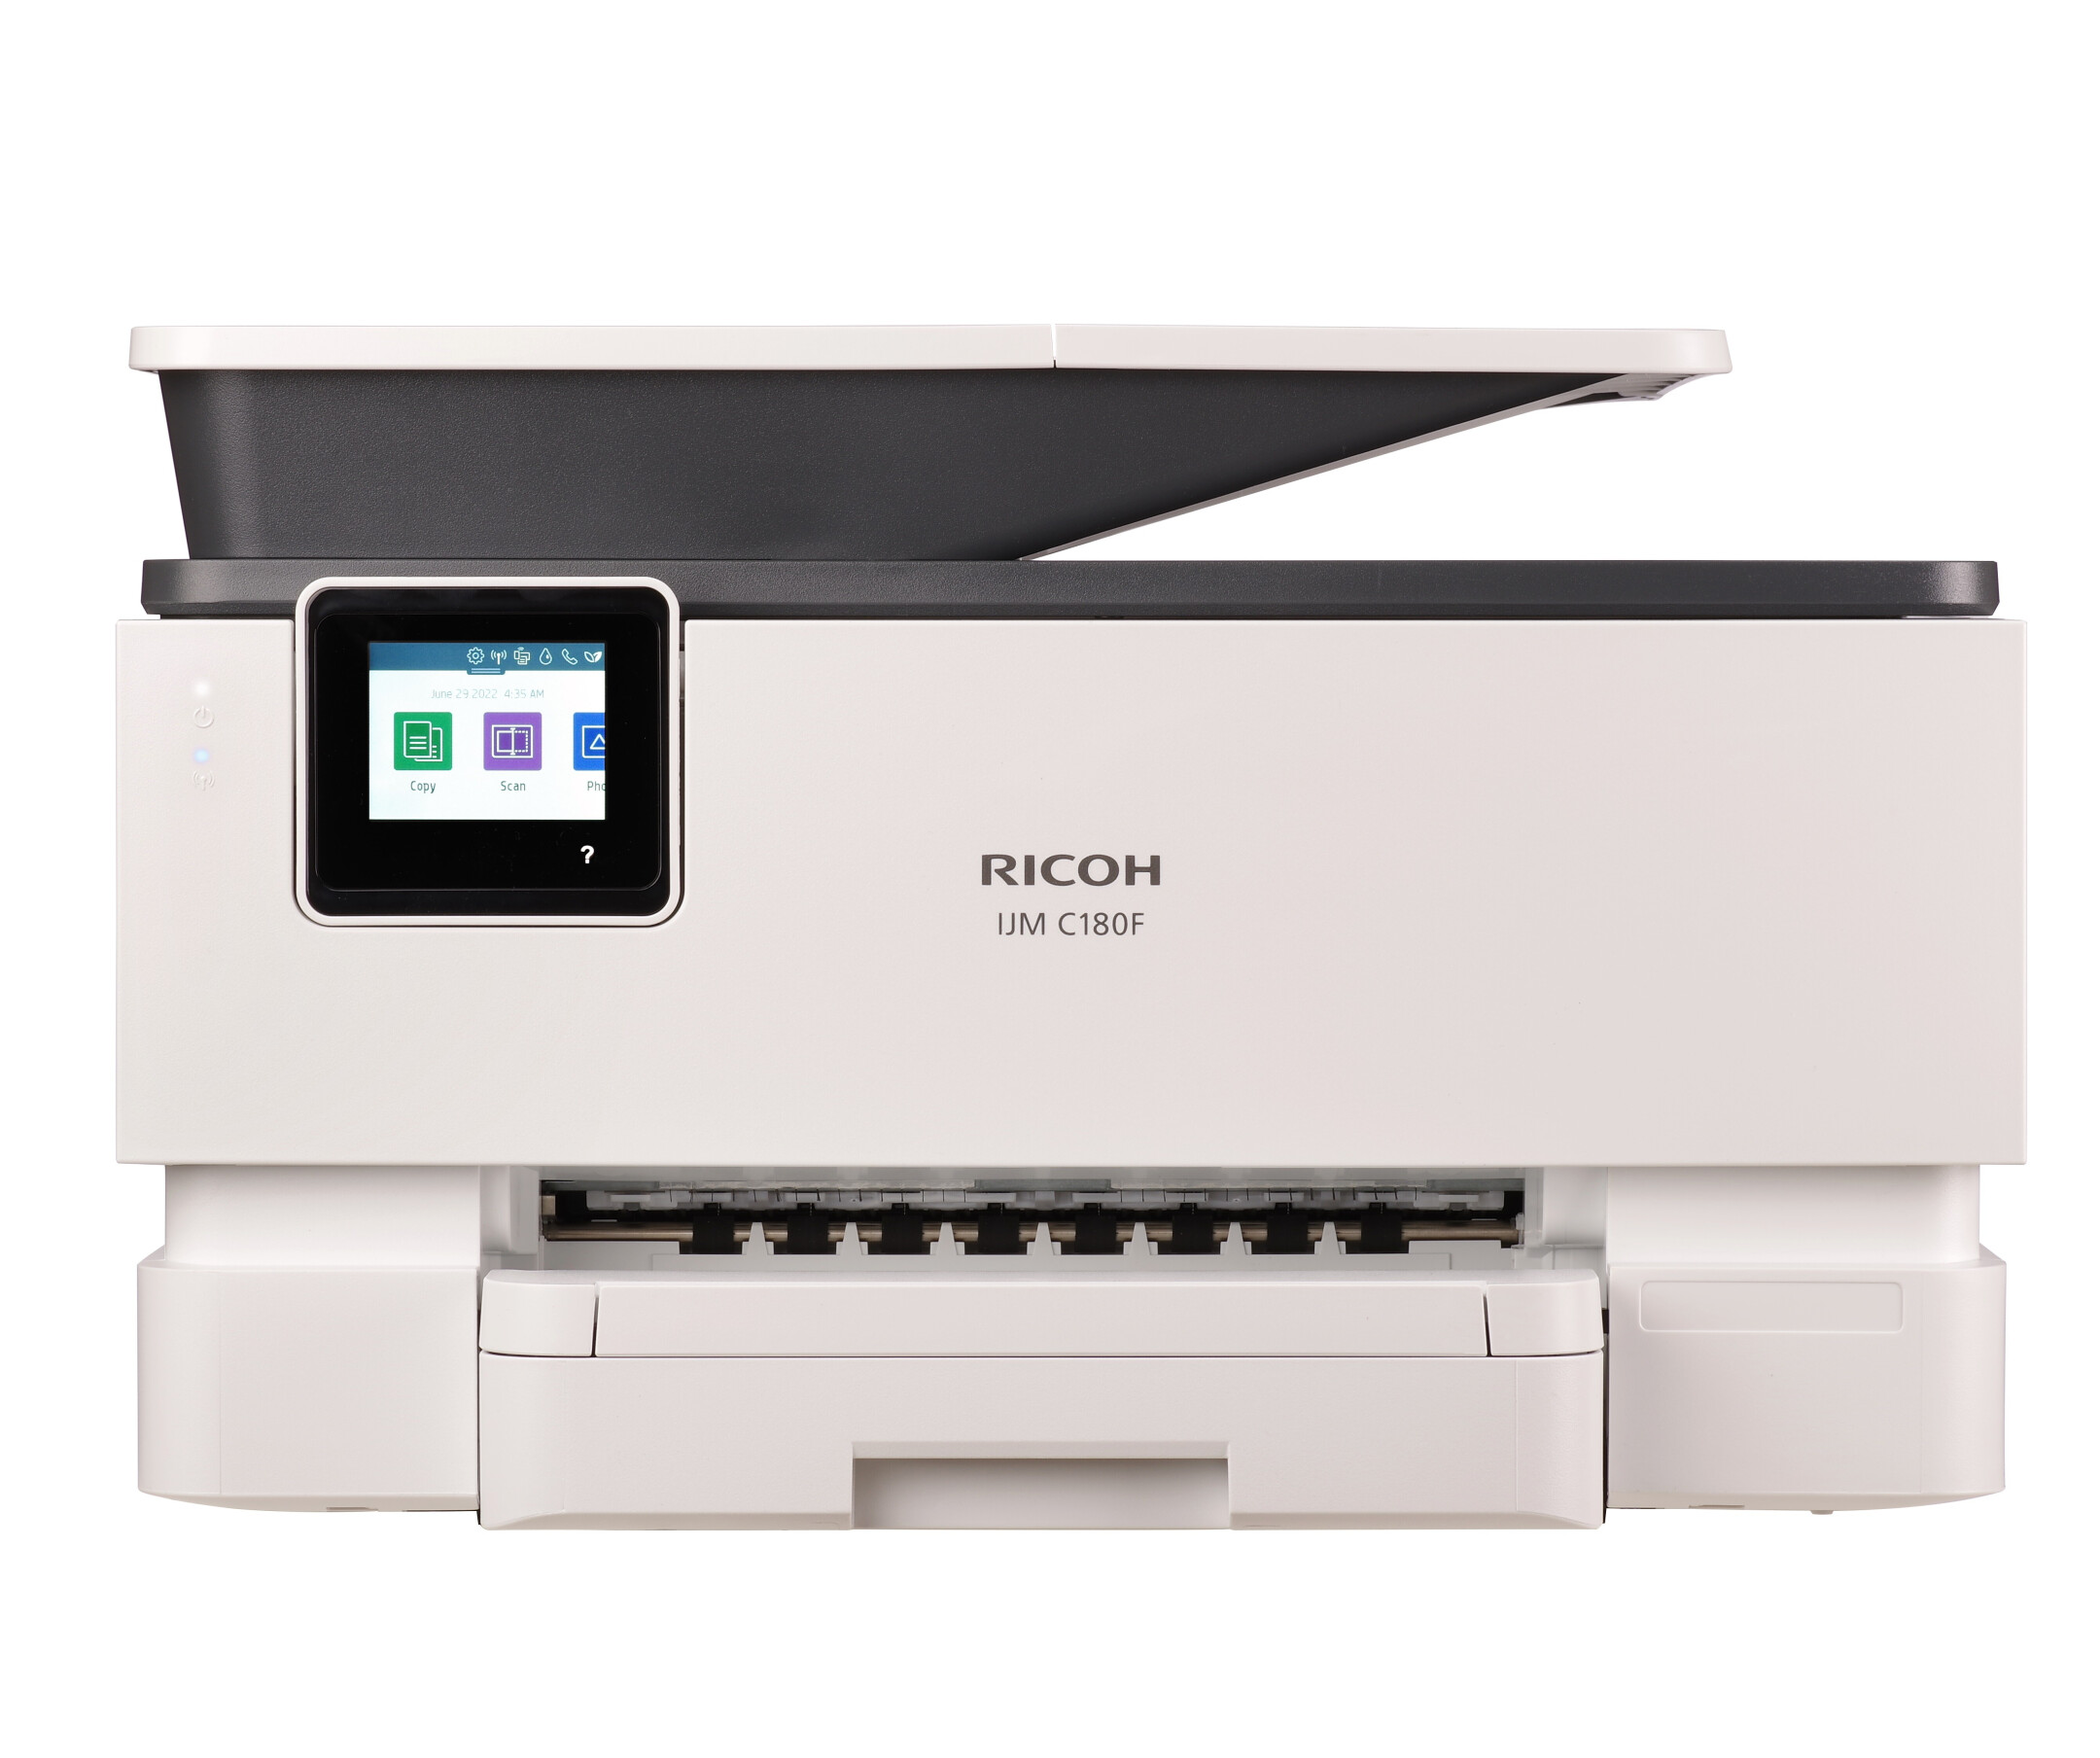 Ricoh-IJM-C180F-4-in-1-Multifunktionsdrucker